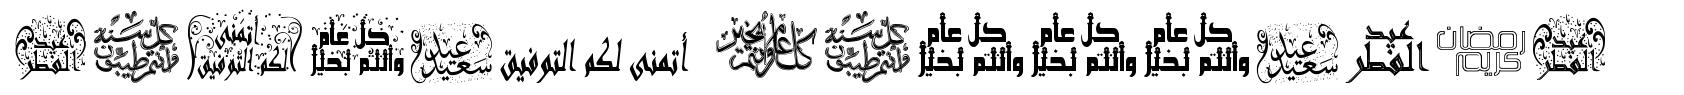 Arabic Greetings font